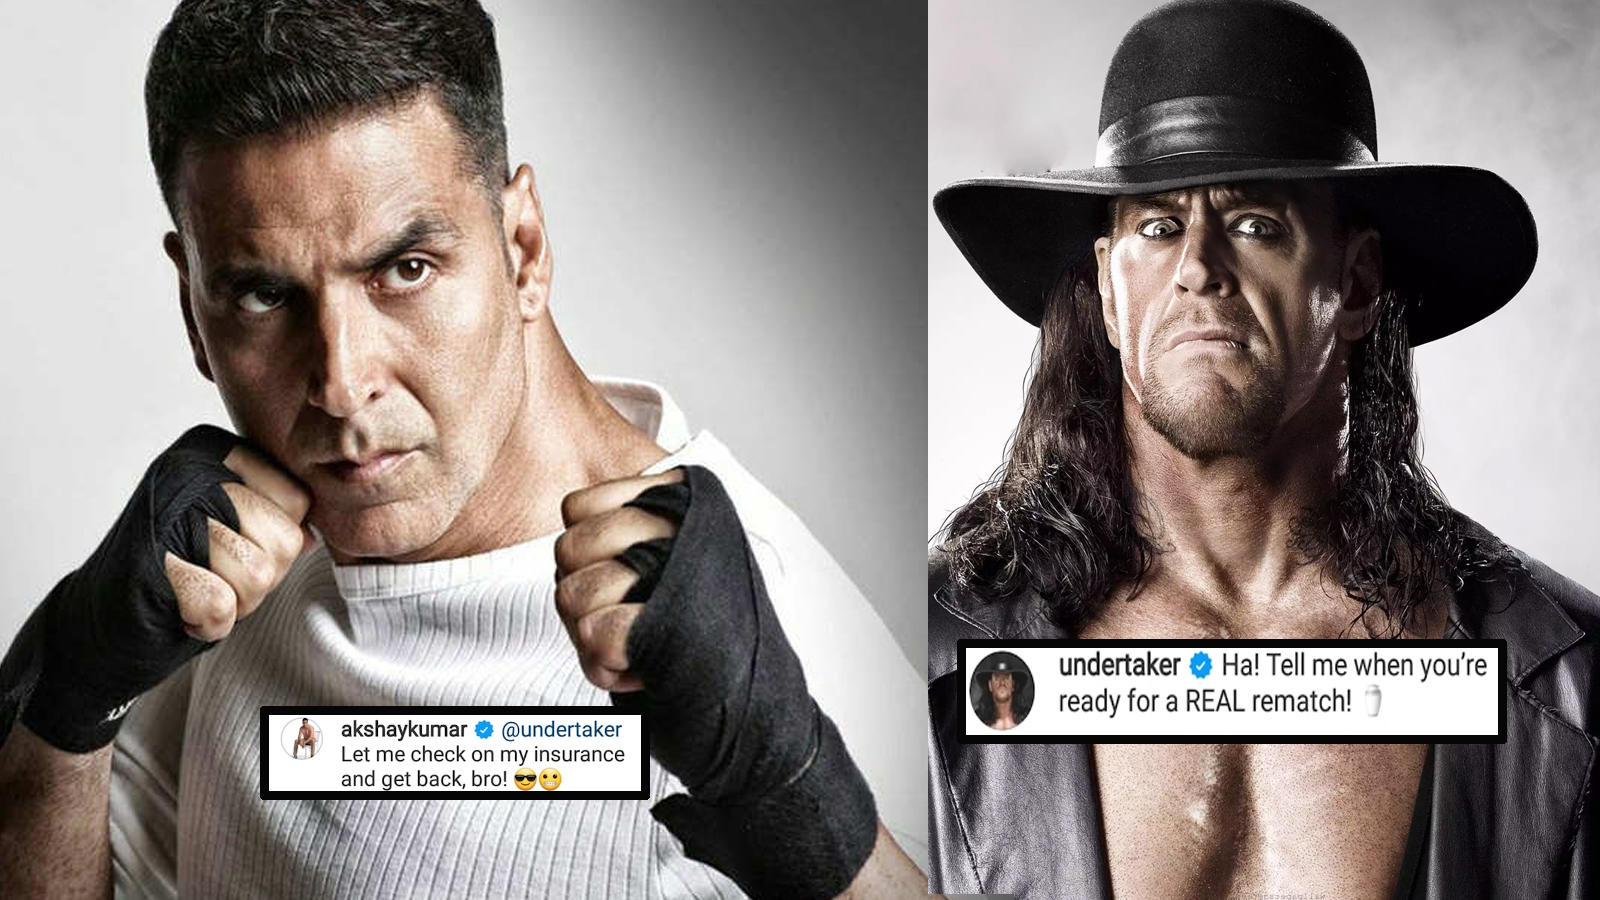 Akshay Kumar's recent tweet about The Undertaker lands him in a ...